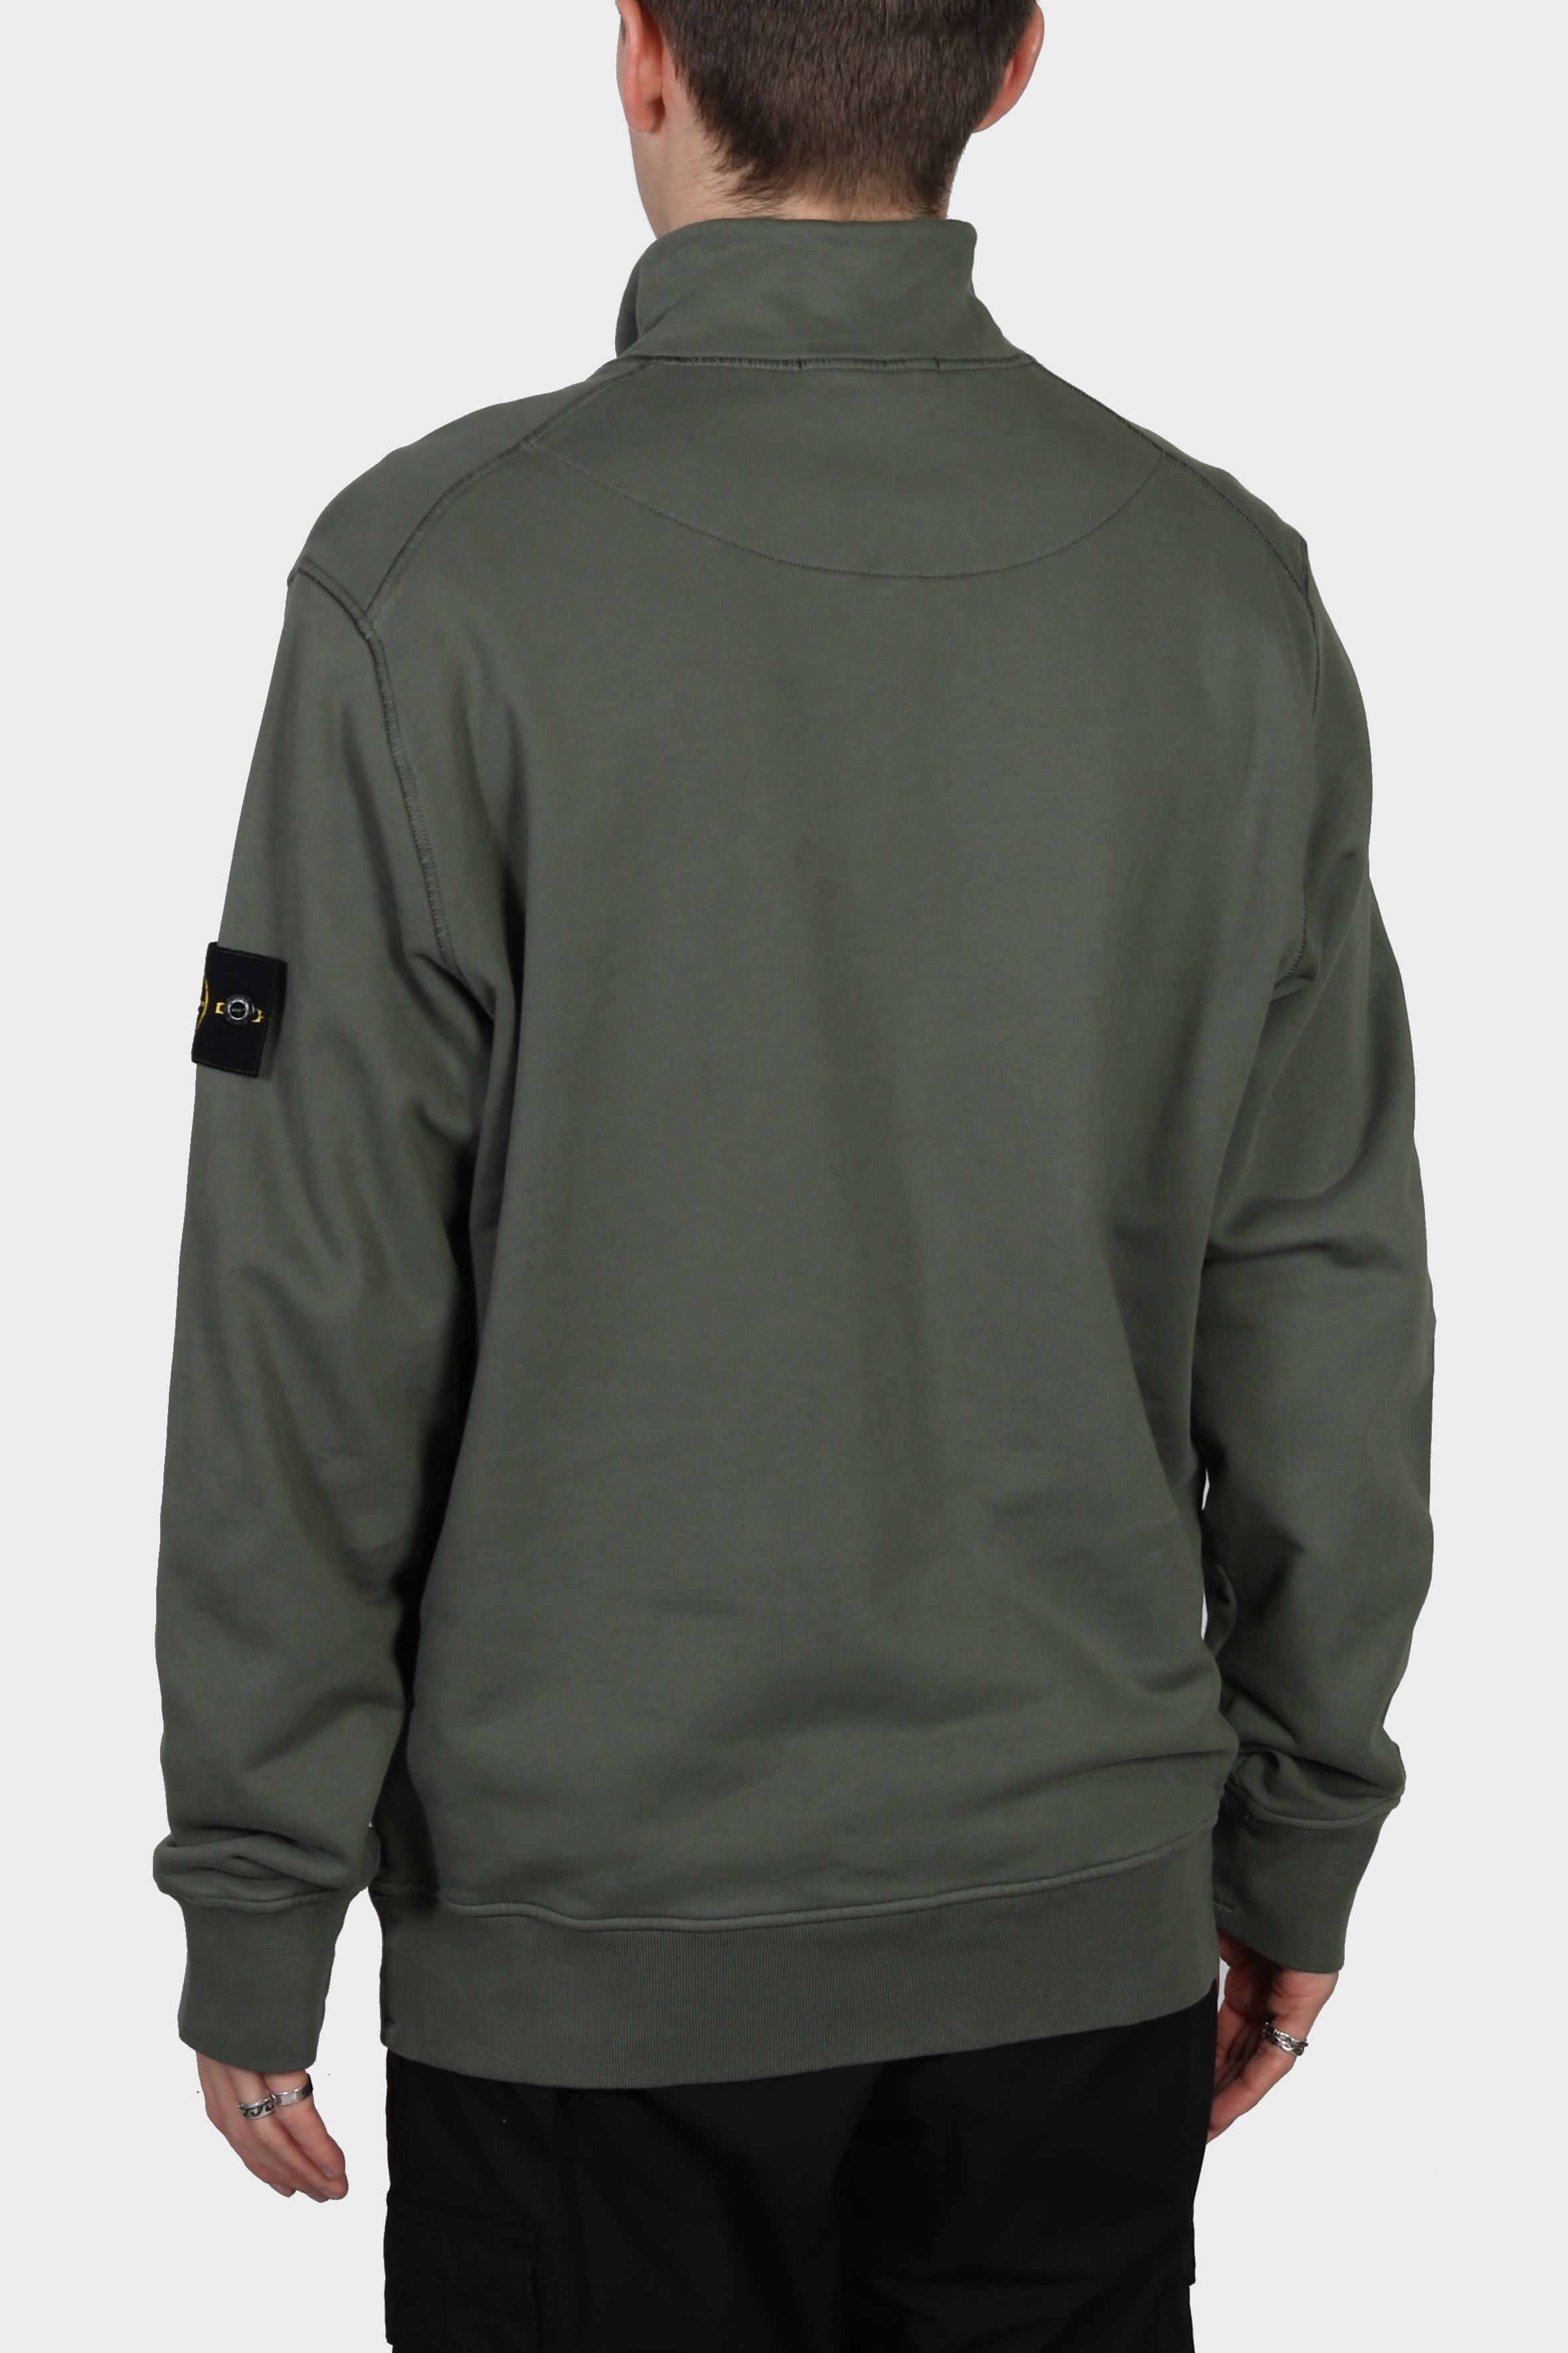 STONE ISLAND Half Zip Sweatshirt in Green 3XL